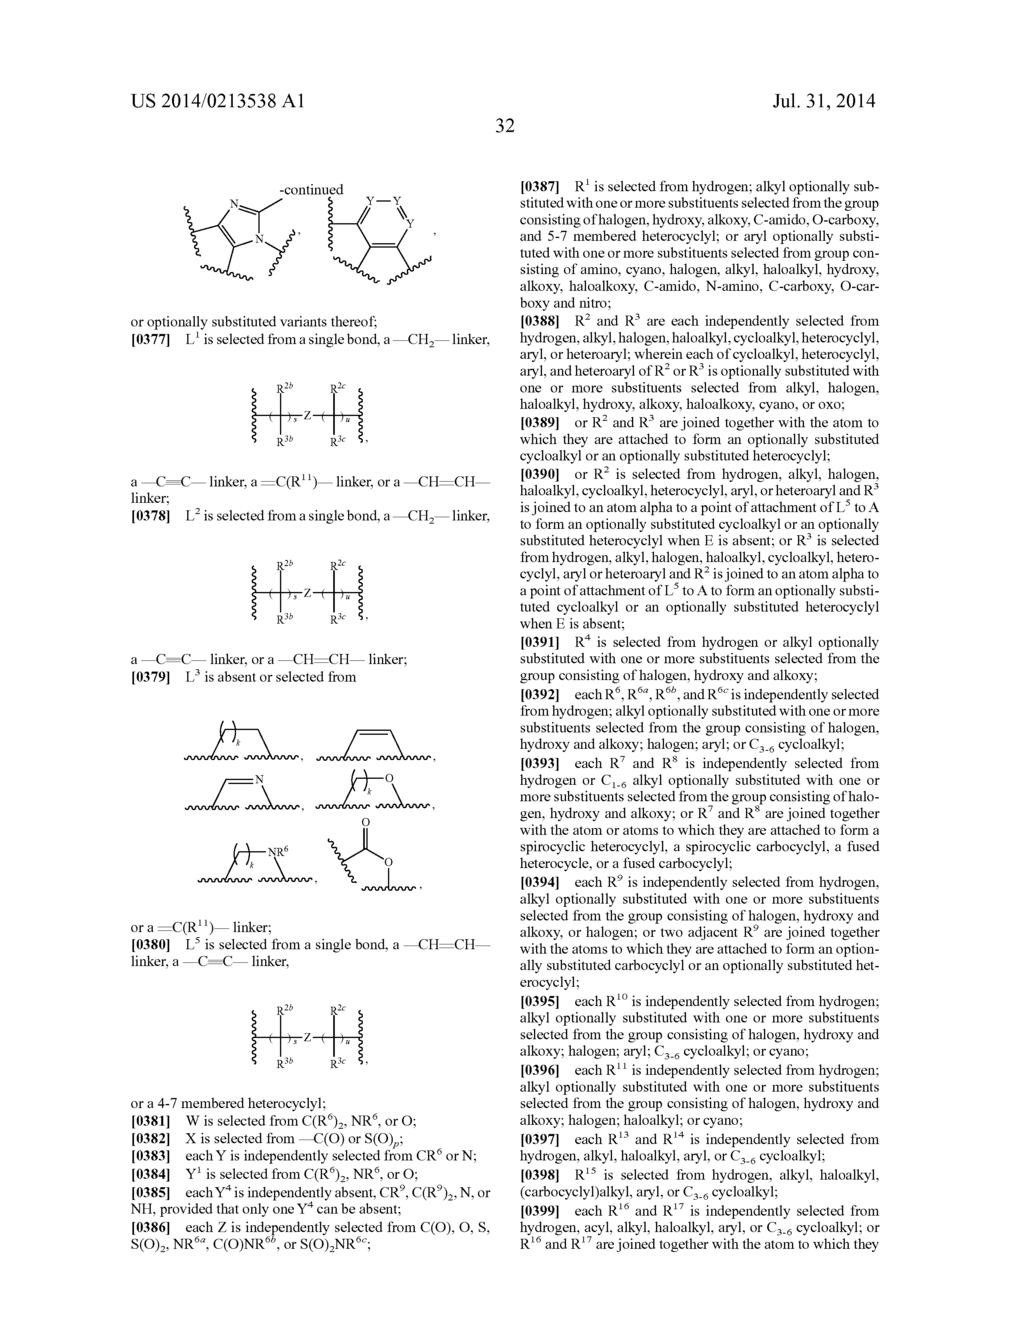 LYSOPHOSPHATIDIC ACID RECEPTOR ANTAGONISTS - diagram, schematic, and image 33